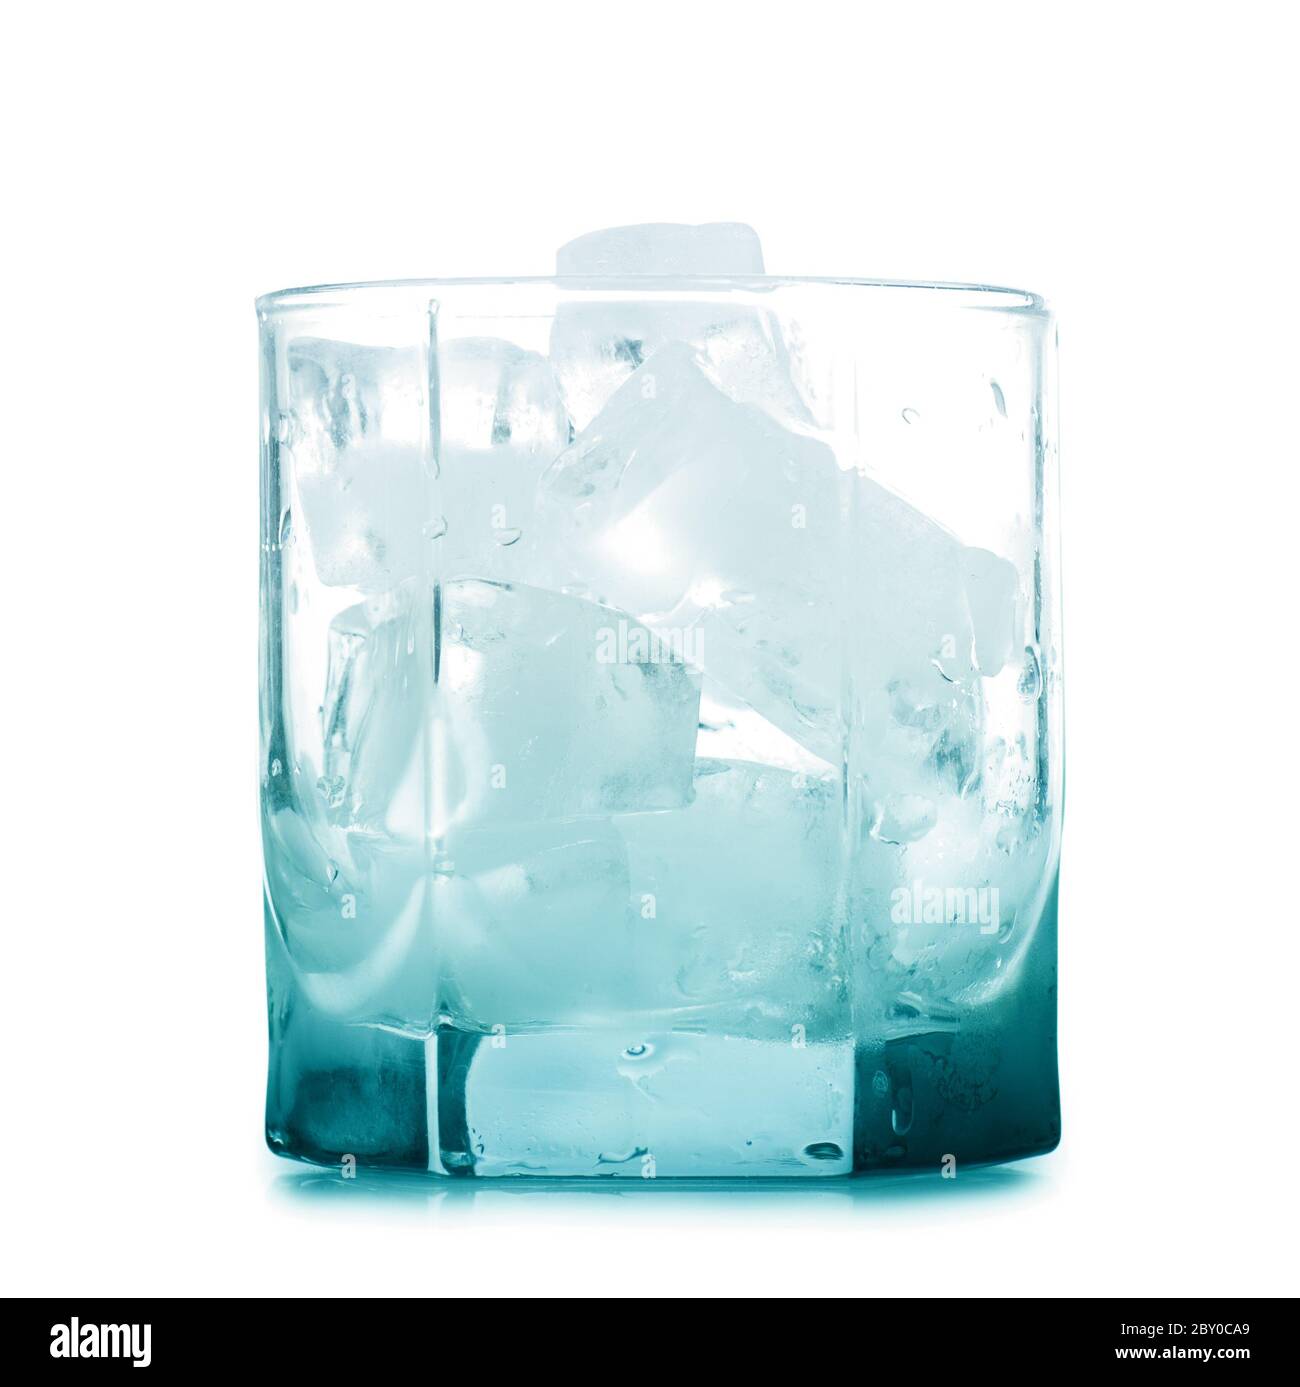 https://c8.alamy.com/comp/2BY0CA9/empty-glass-with-ice-2BY0CA9.jpg